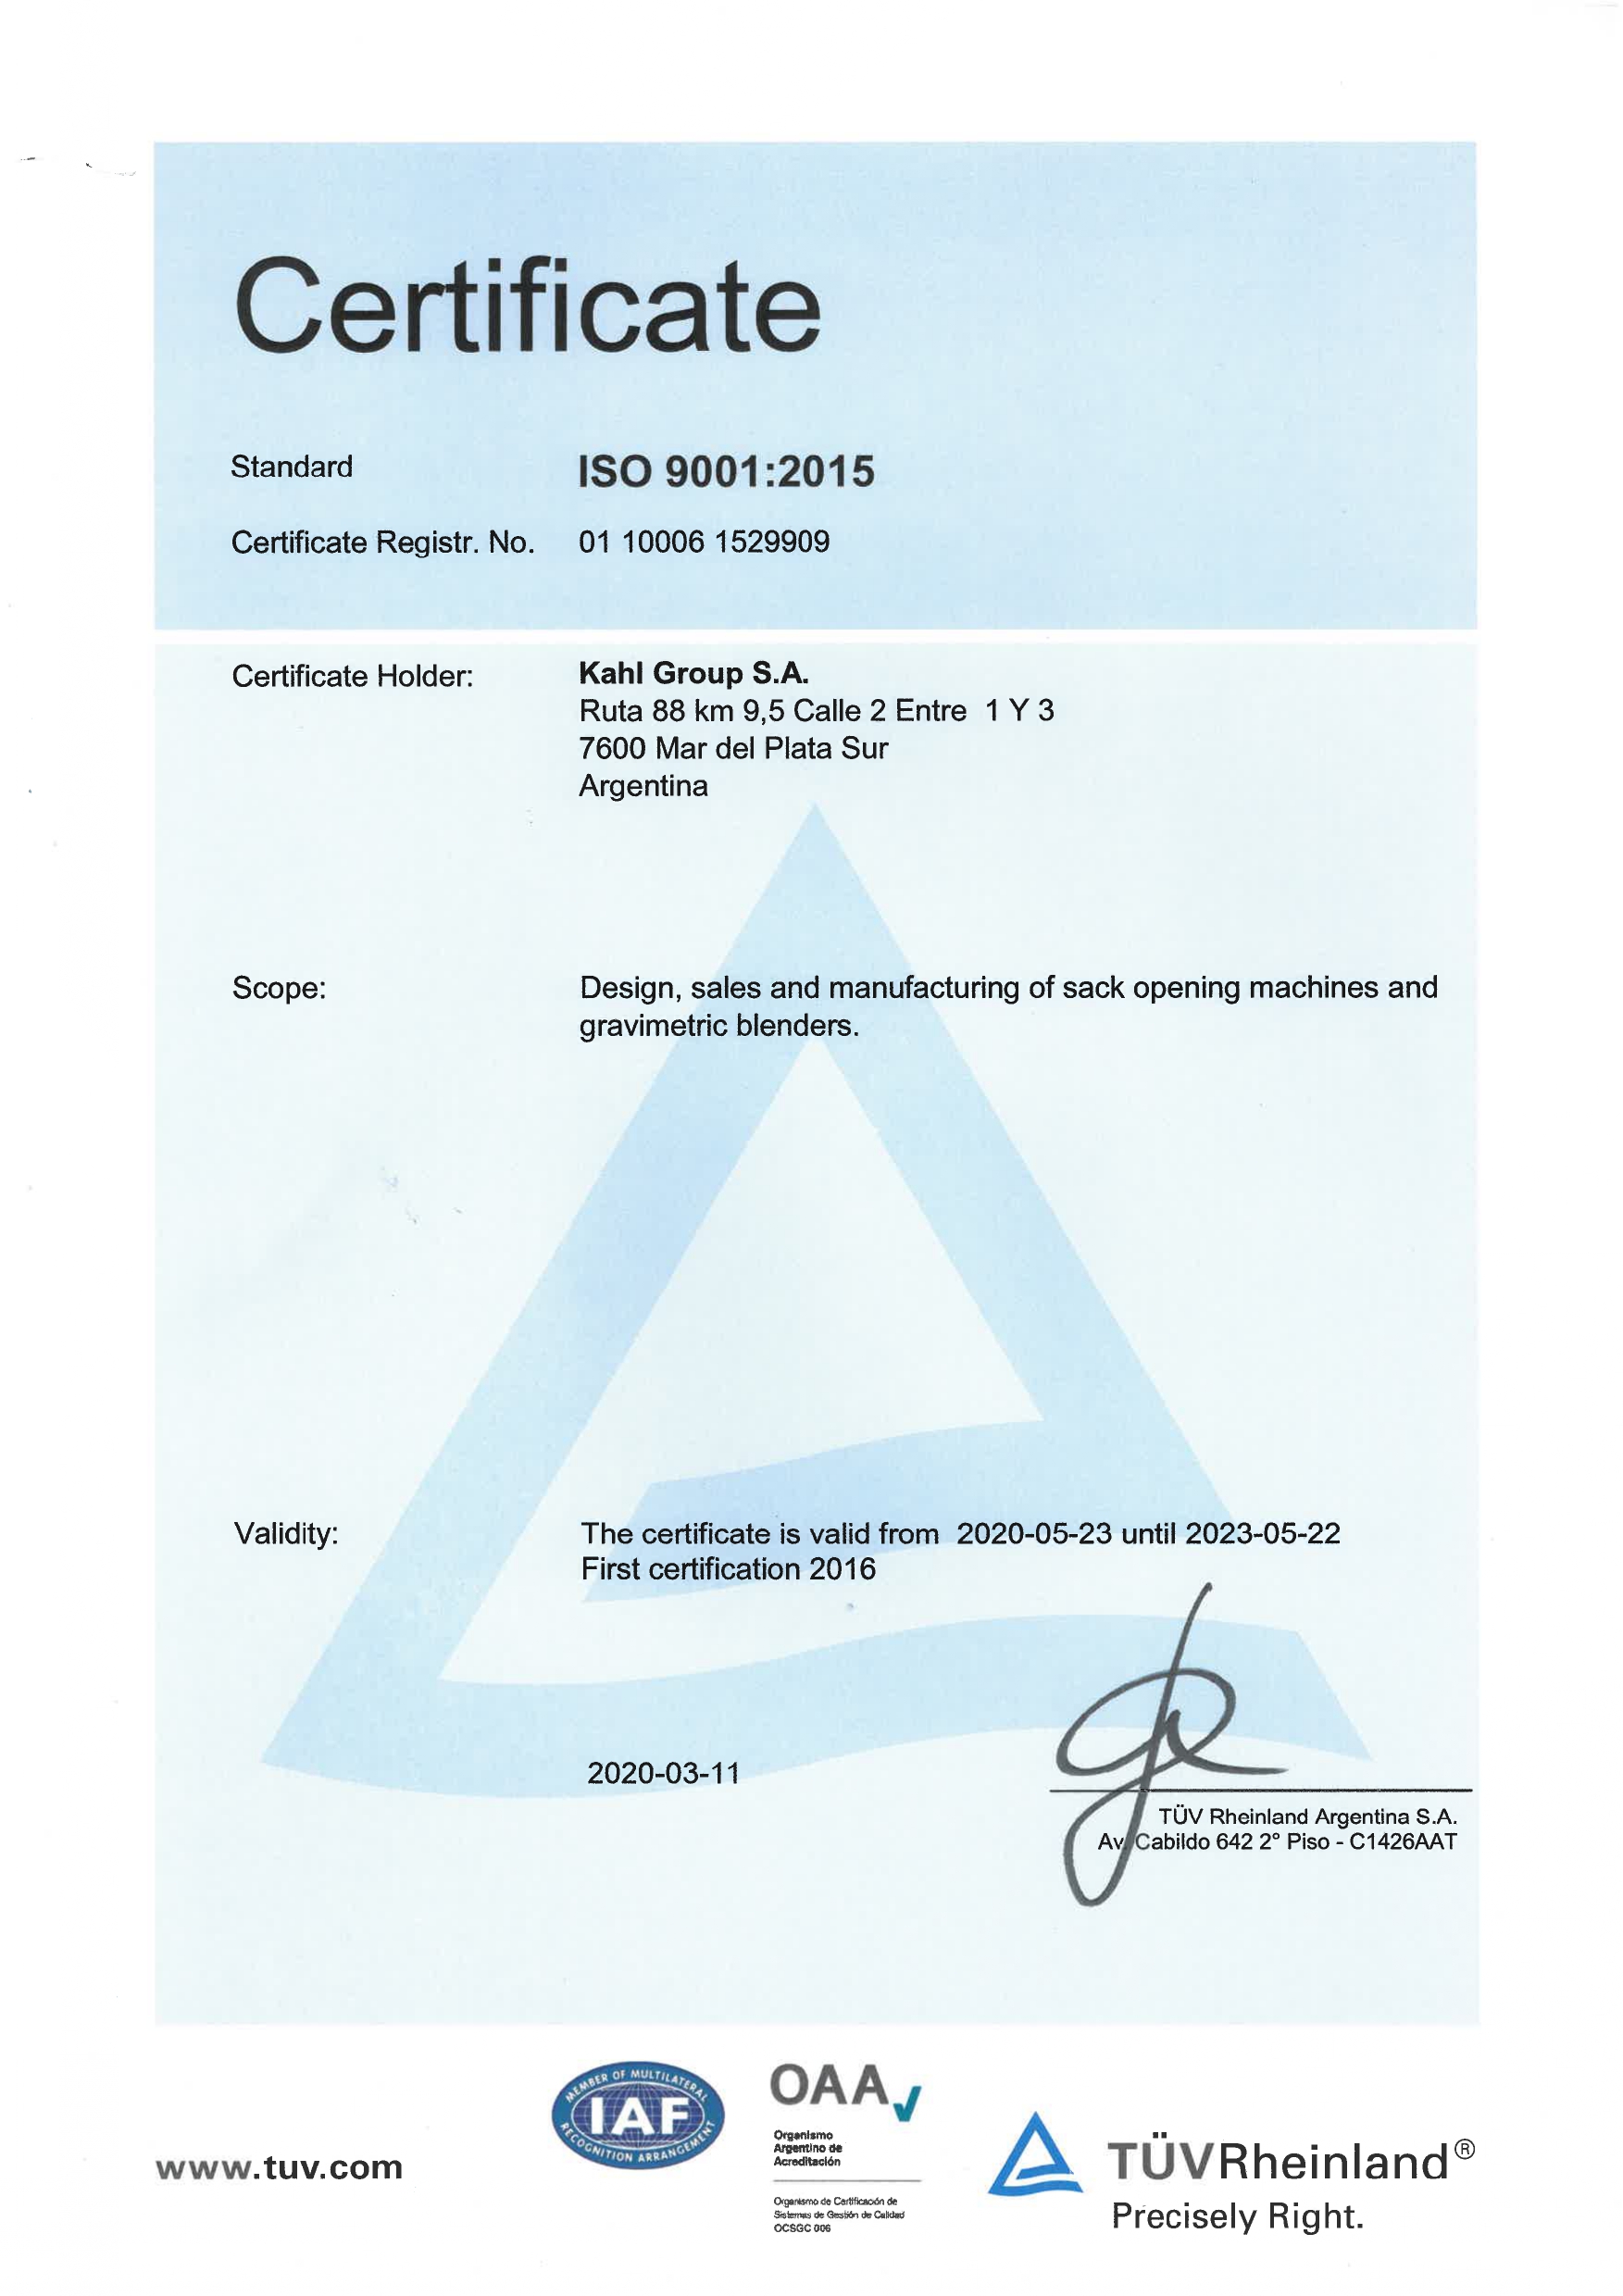 Certificaciones KAHL Group normas ISO 9001